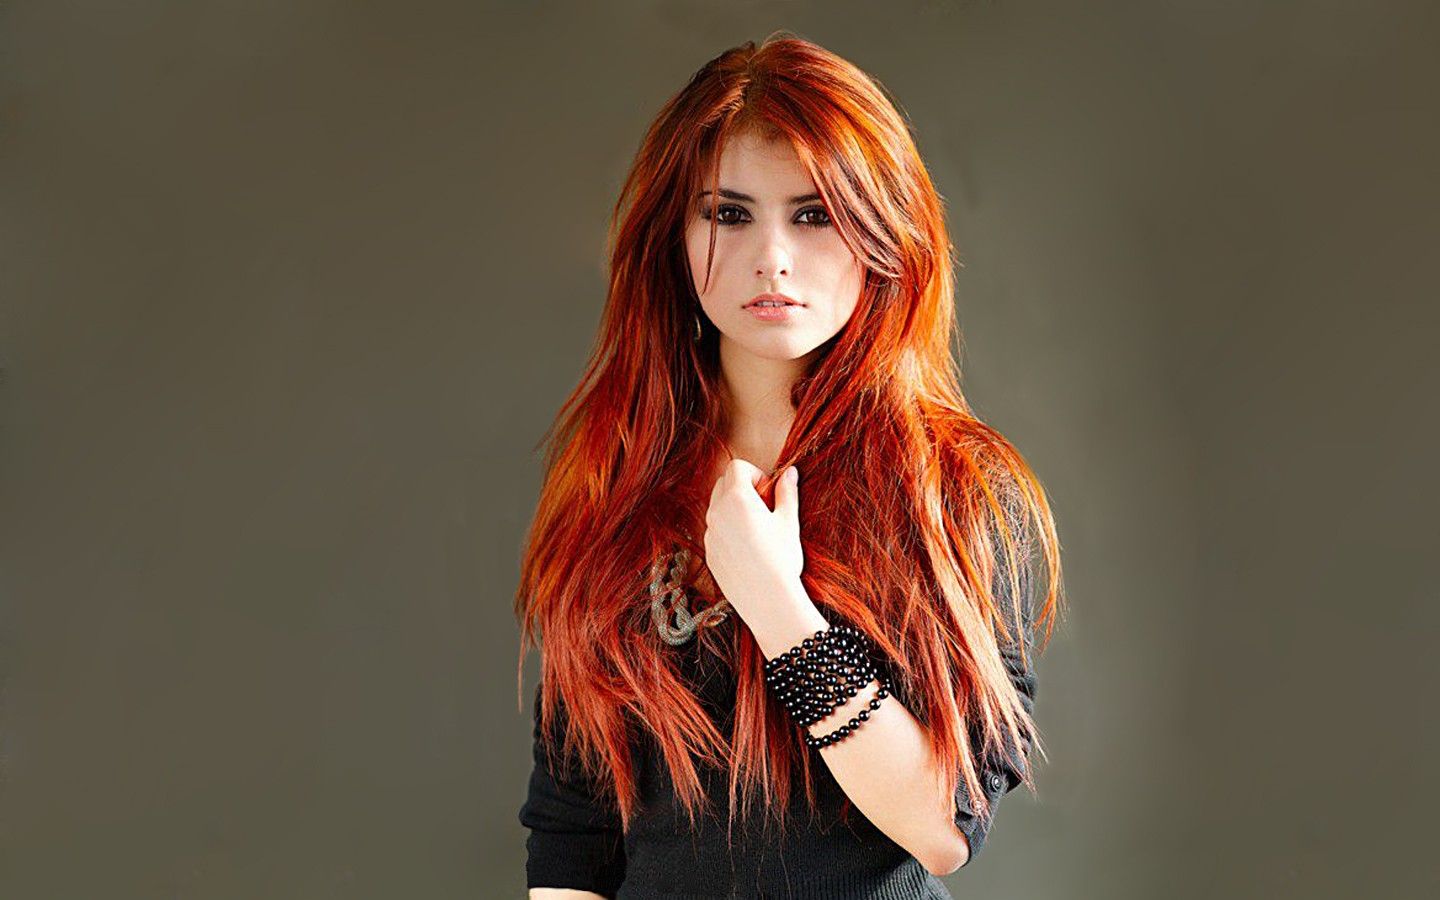 Gorgeous Redhead Wallpaper